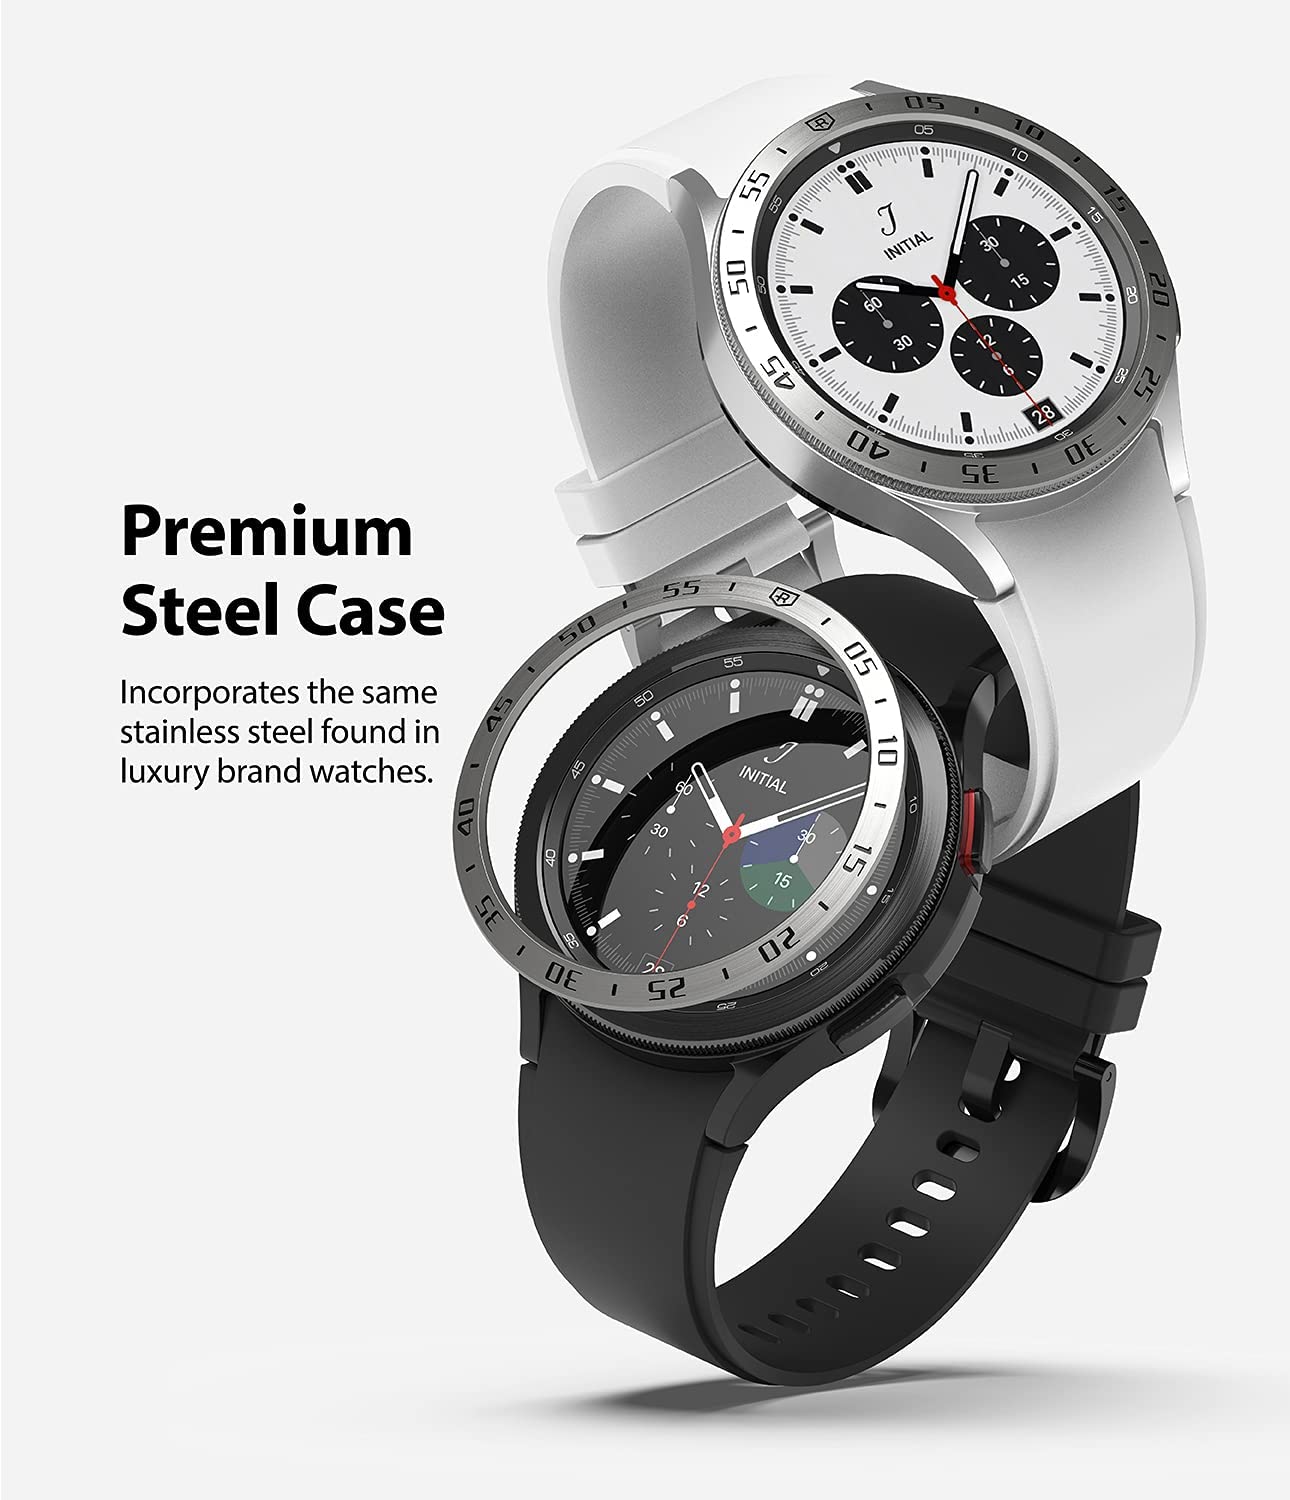 Bezel Styling Samsung Galaxy Watch 4 Classic 42mm Argent